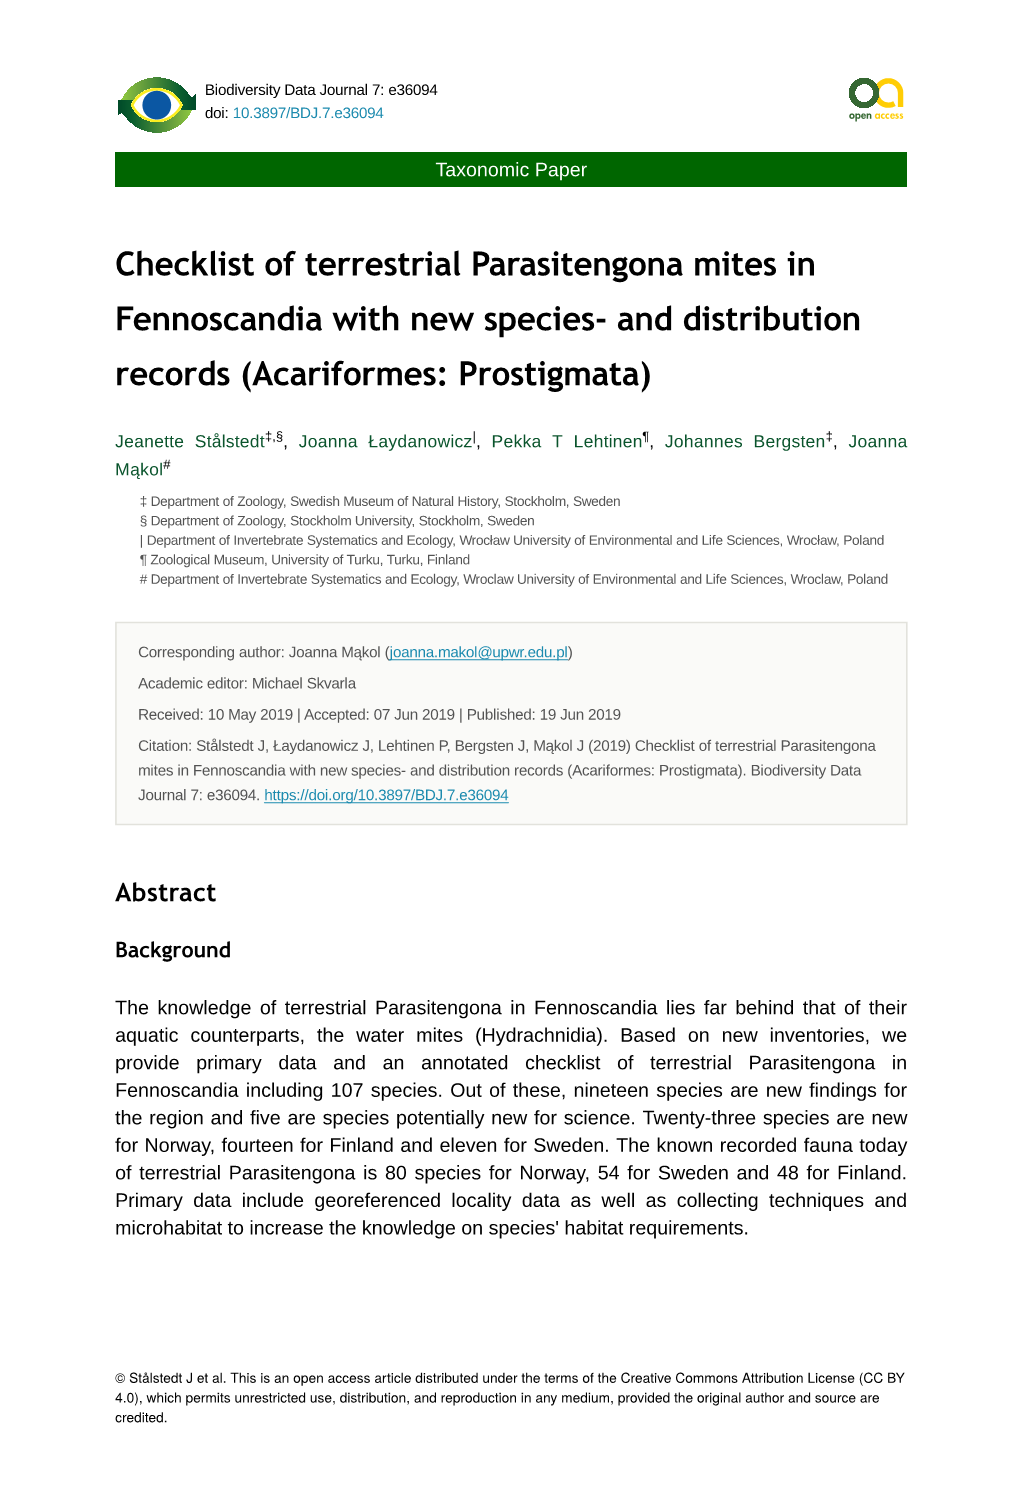 Checklist of Terrestrial Parasitengona Mites in Fennoscandia with New Species- and Distribution Records (Acariformes: Prostigmata)